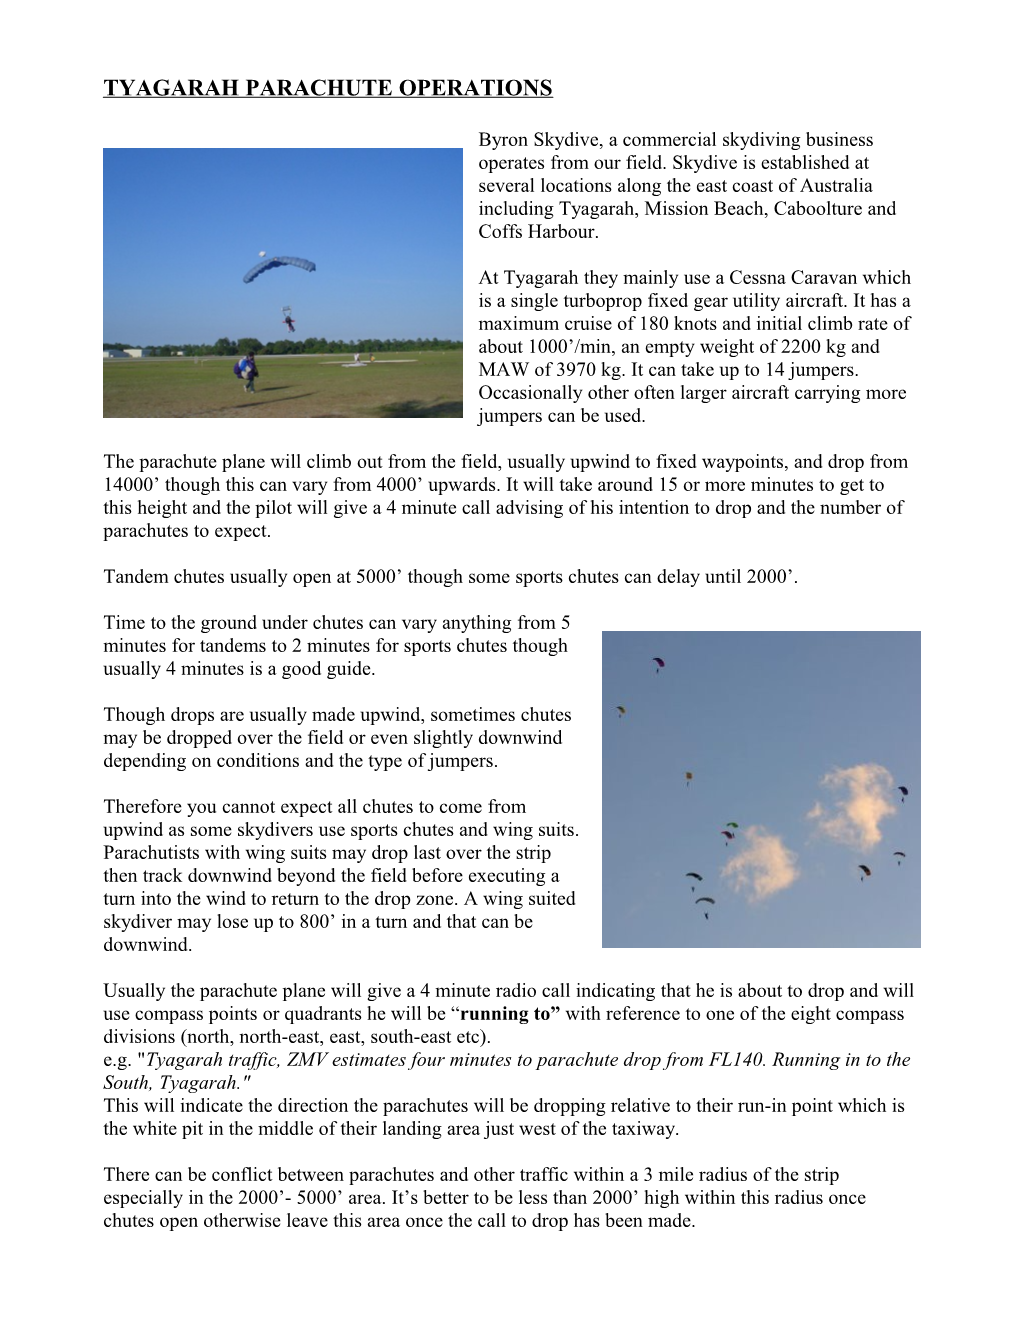 Tyagarah Parachute Operations